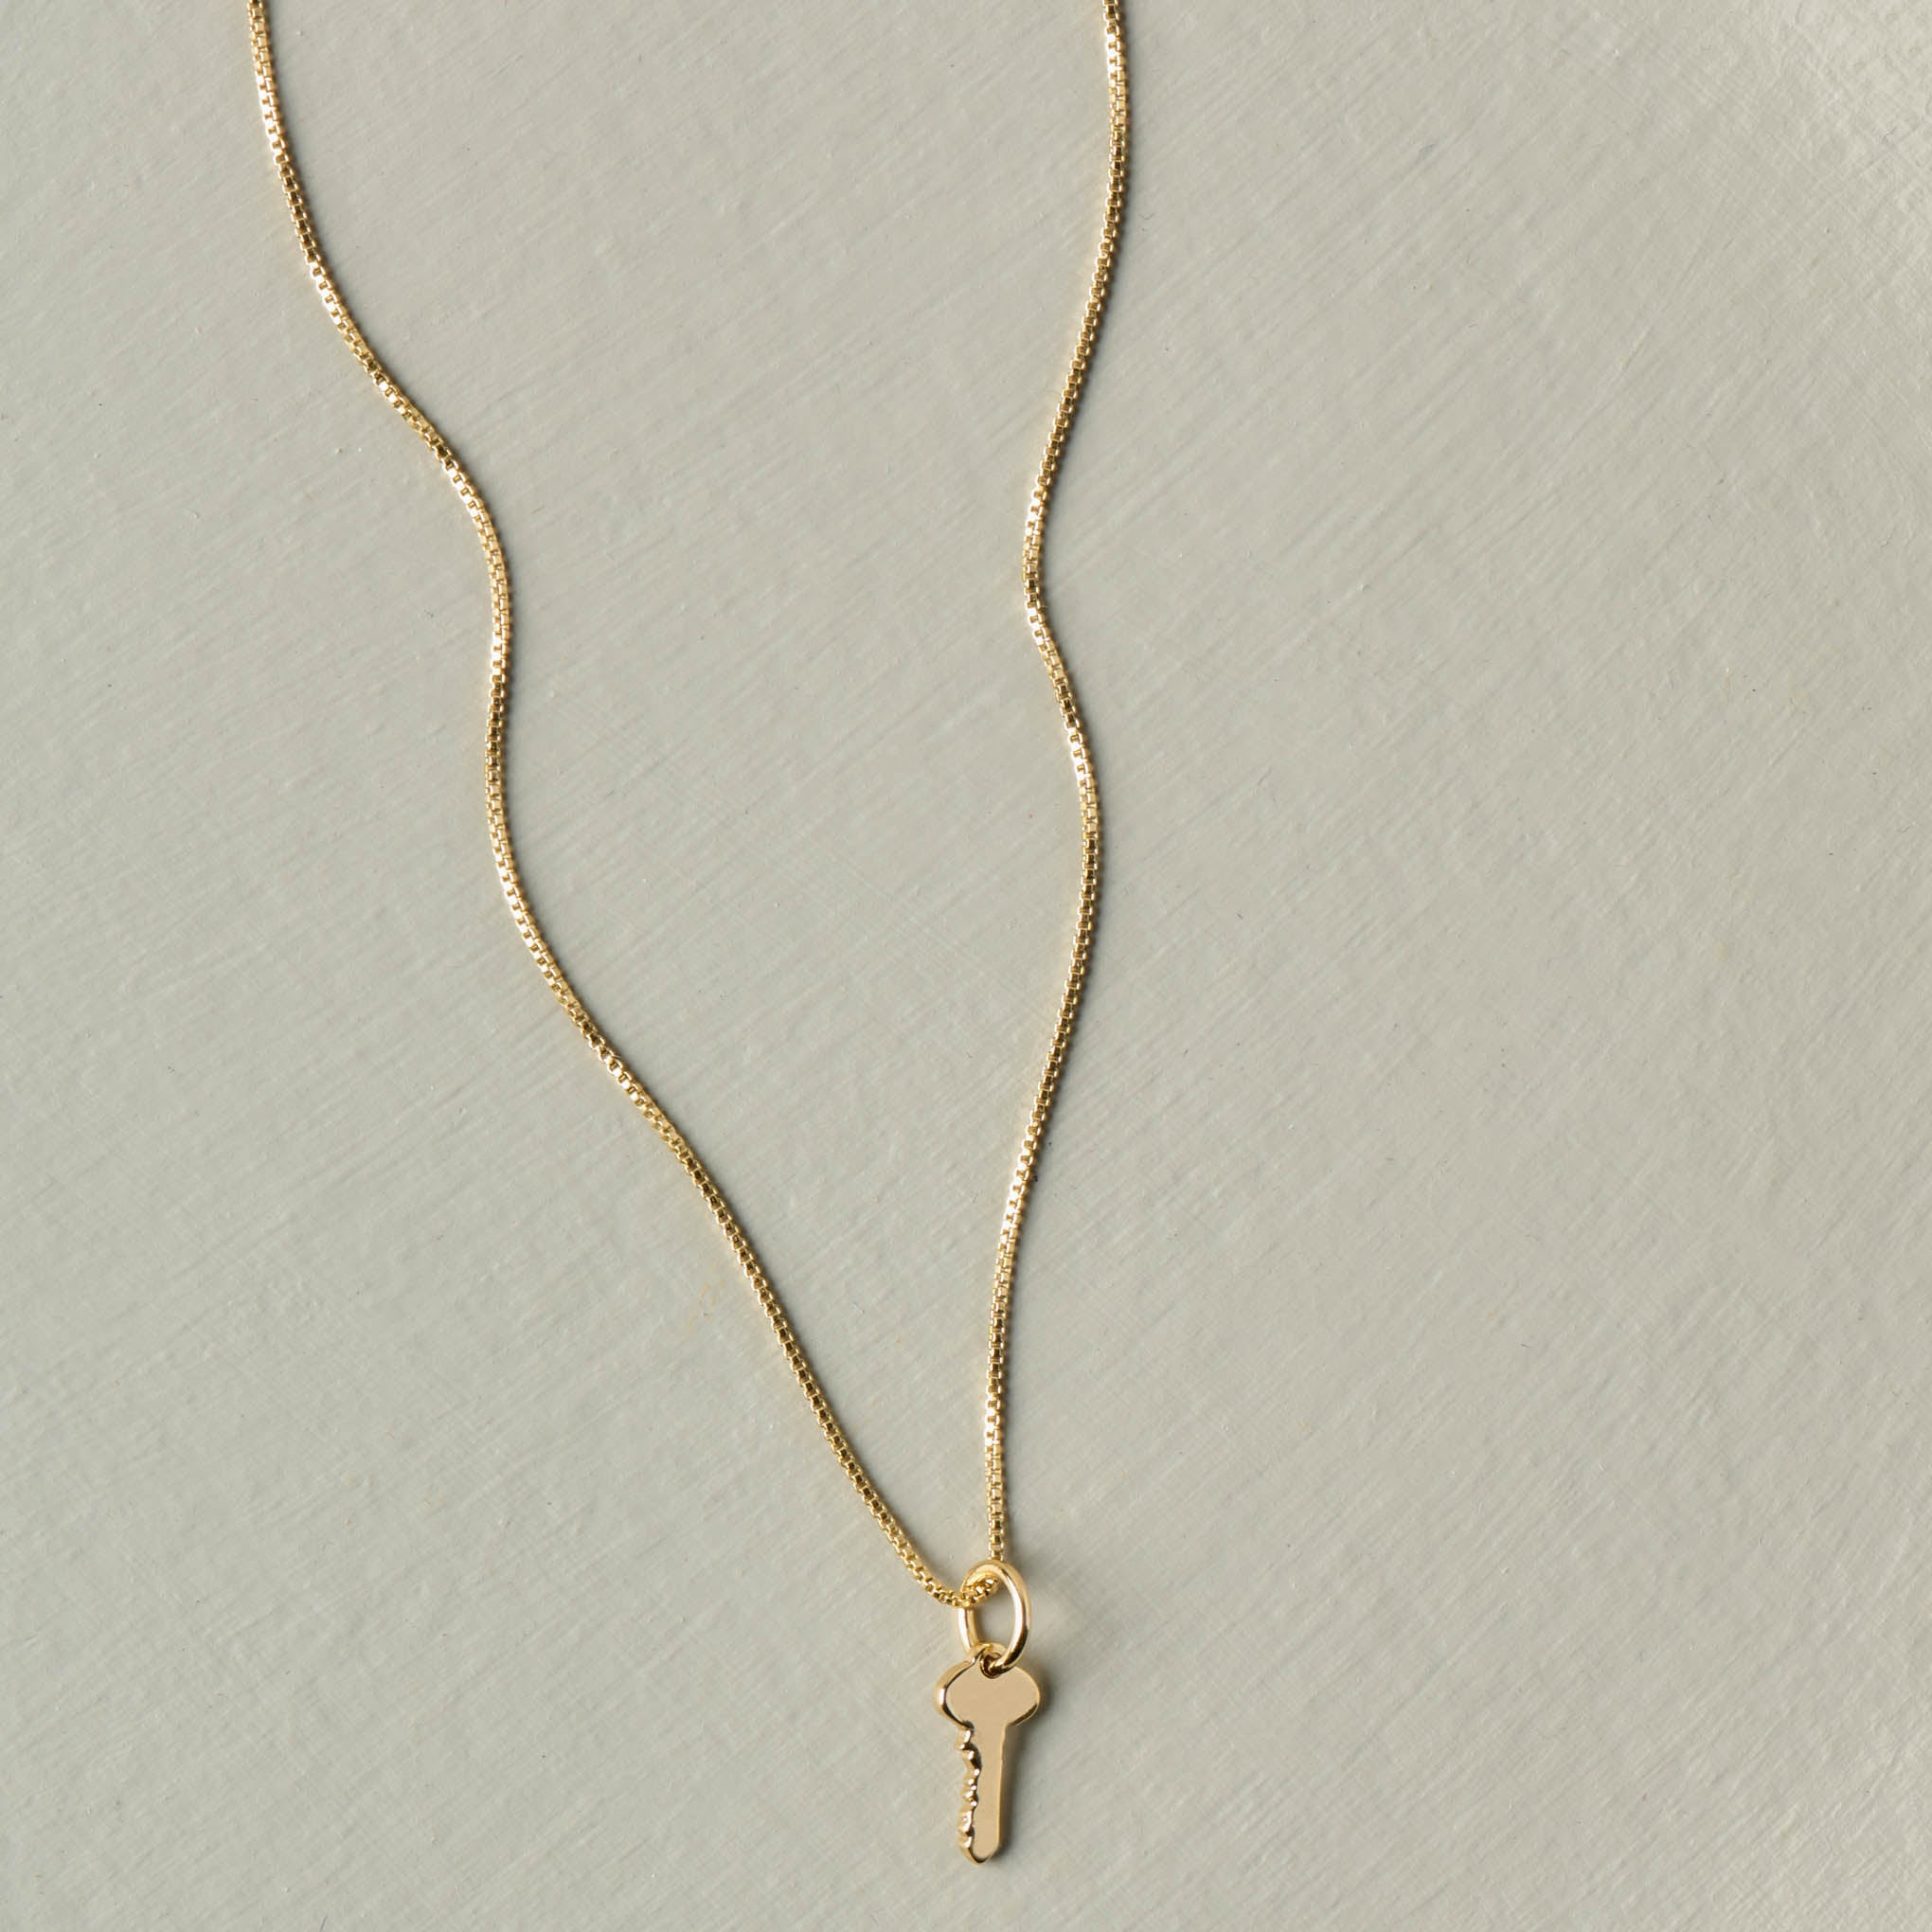 Golden Key Chain Necklace - Magnolia